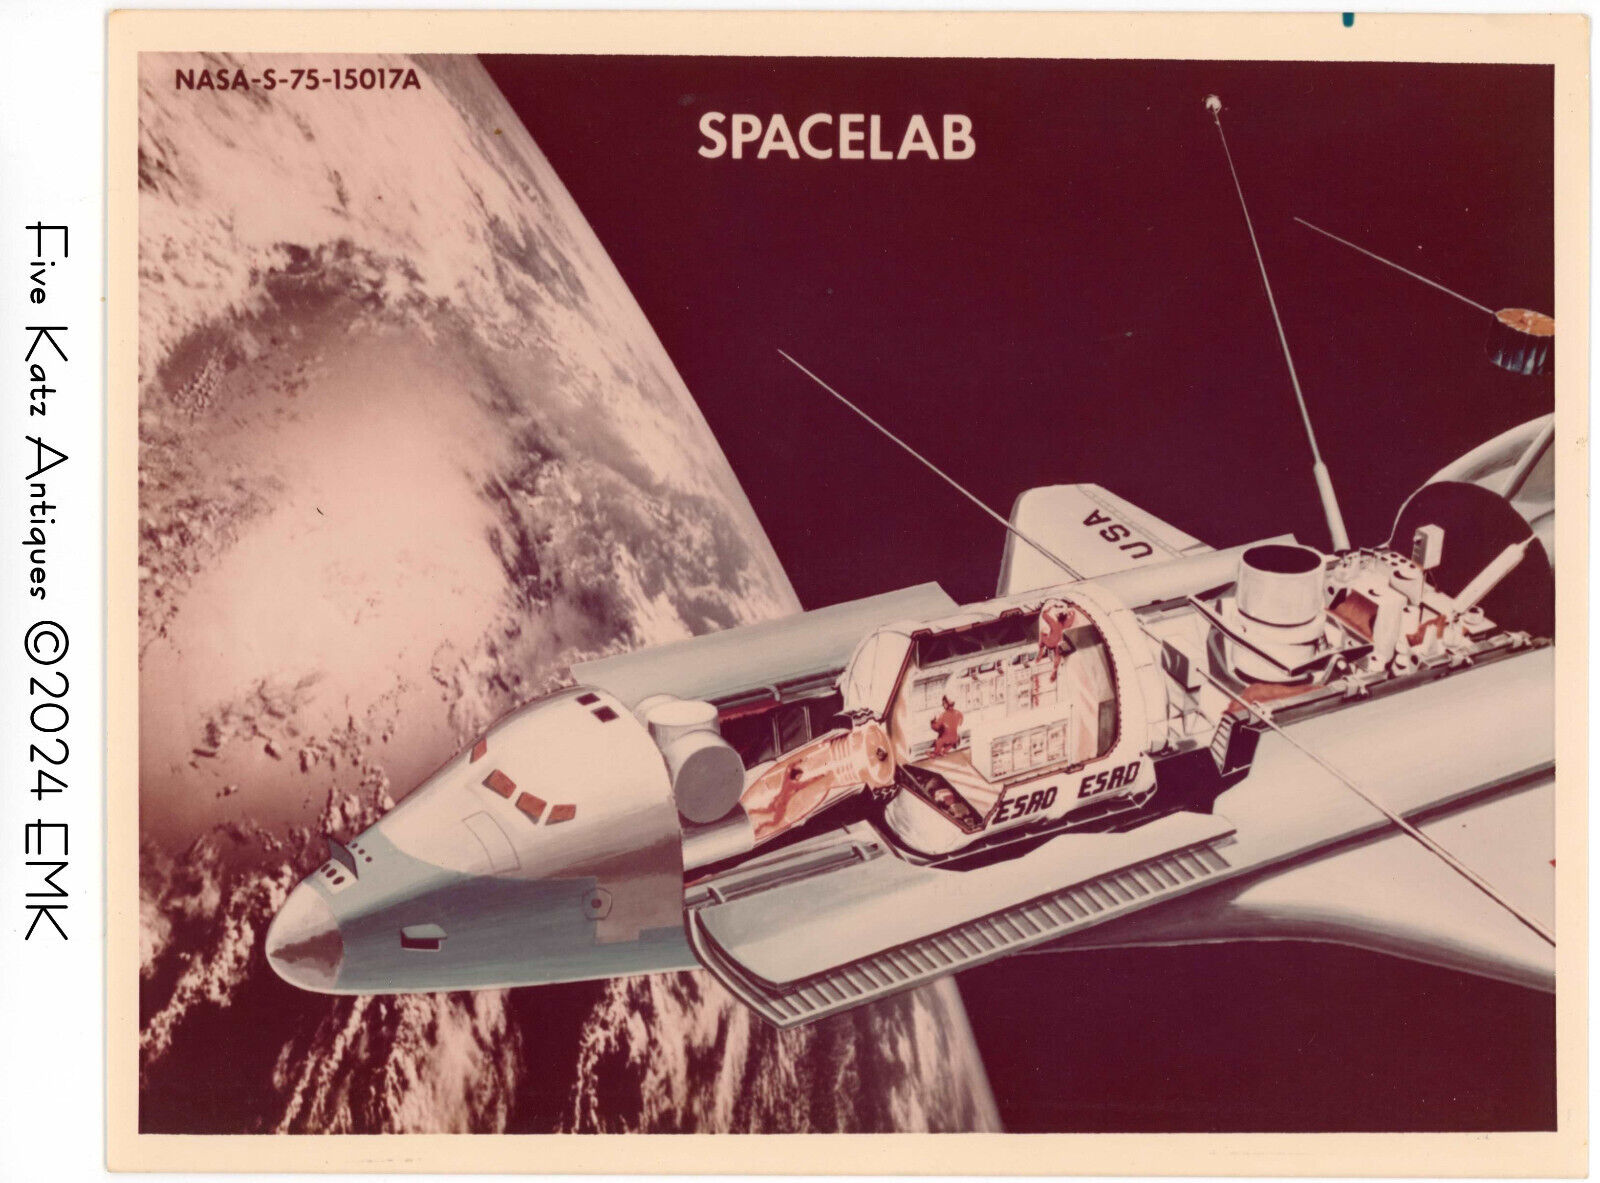 NASA / Shuttle - Concept Art - Spacelab - Original not a reprint